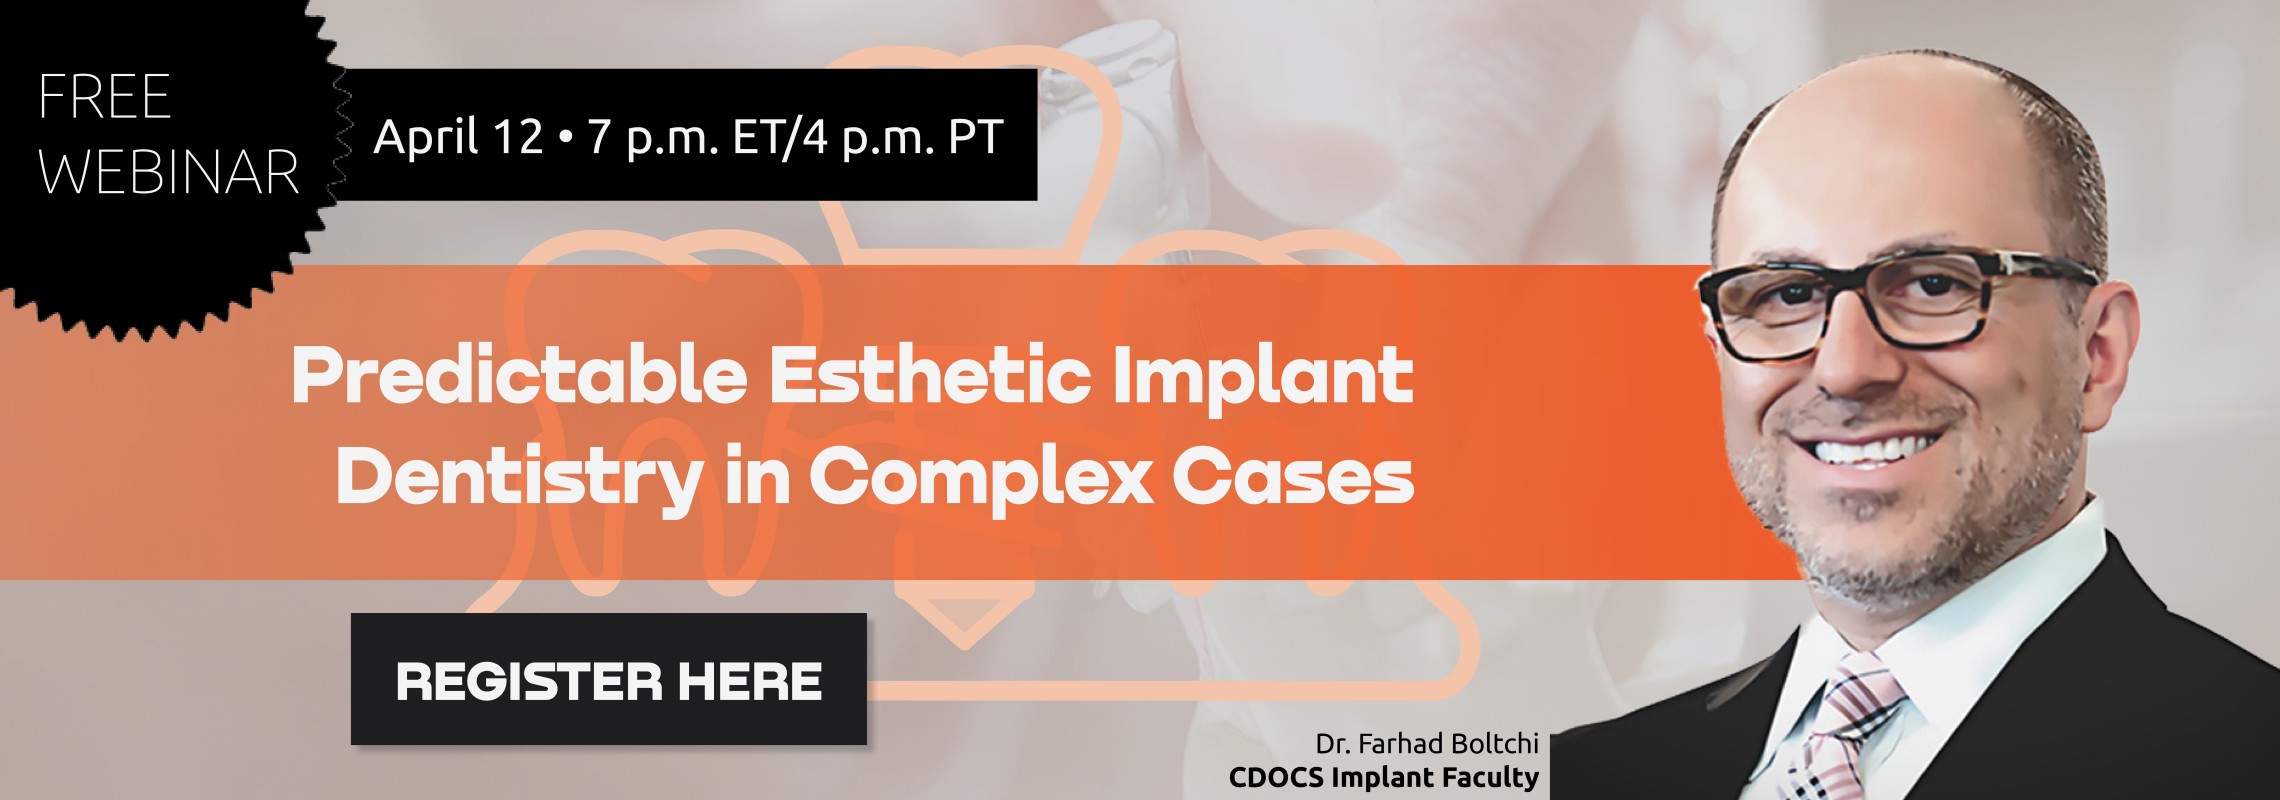 Predictable Esthetic Implant Dentistry in Complex Cases Webinar